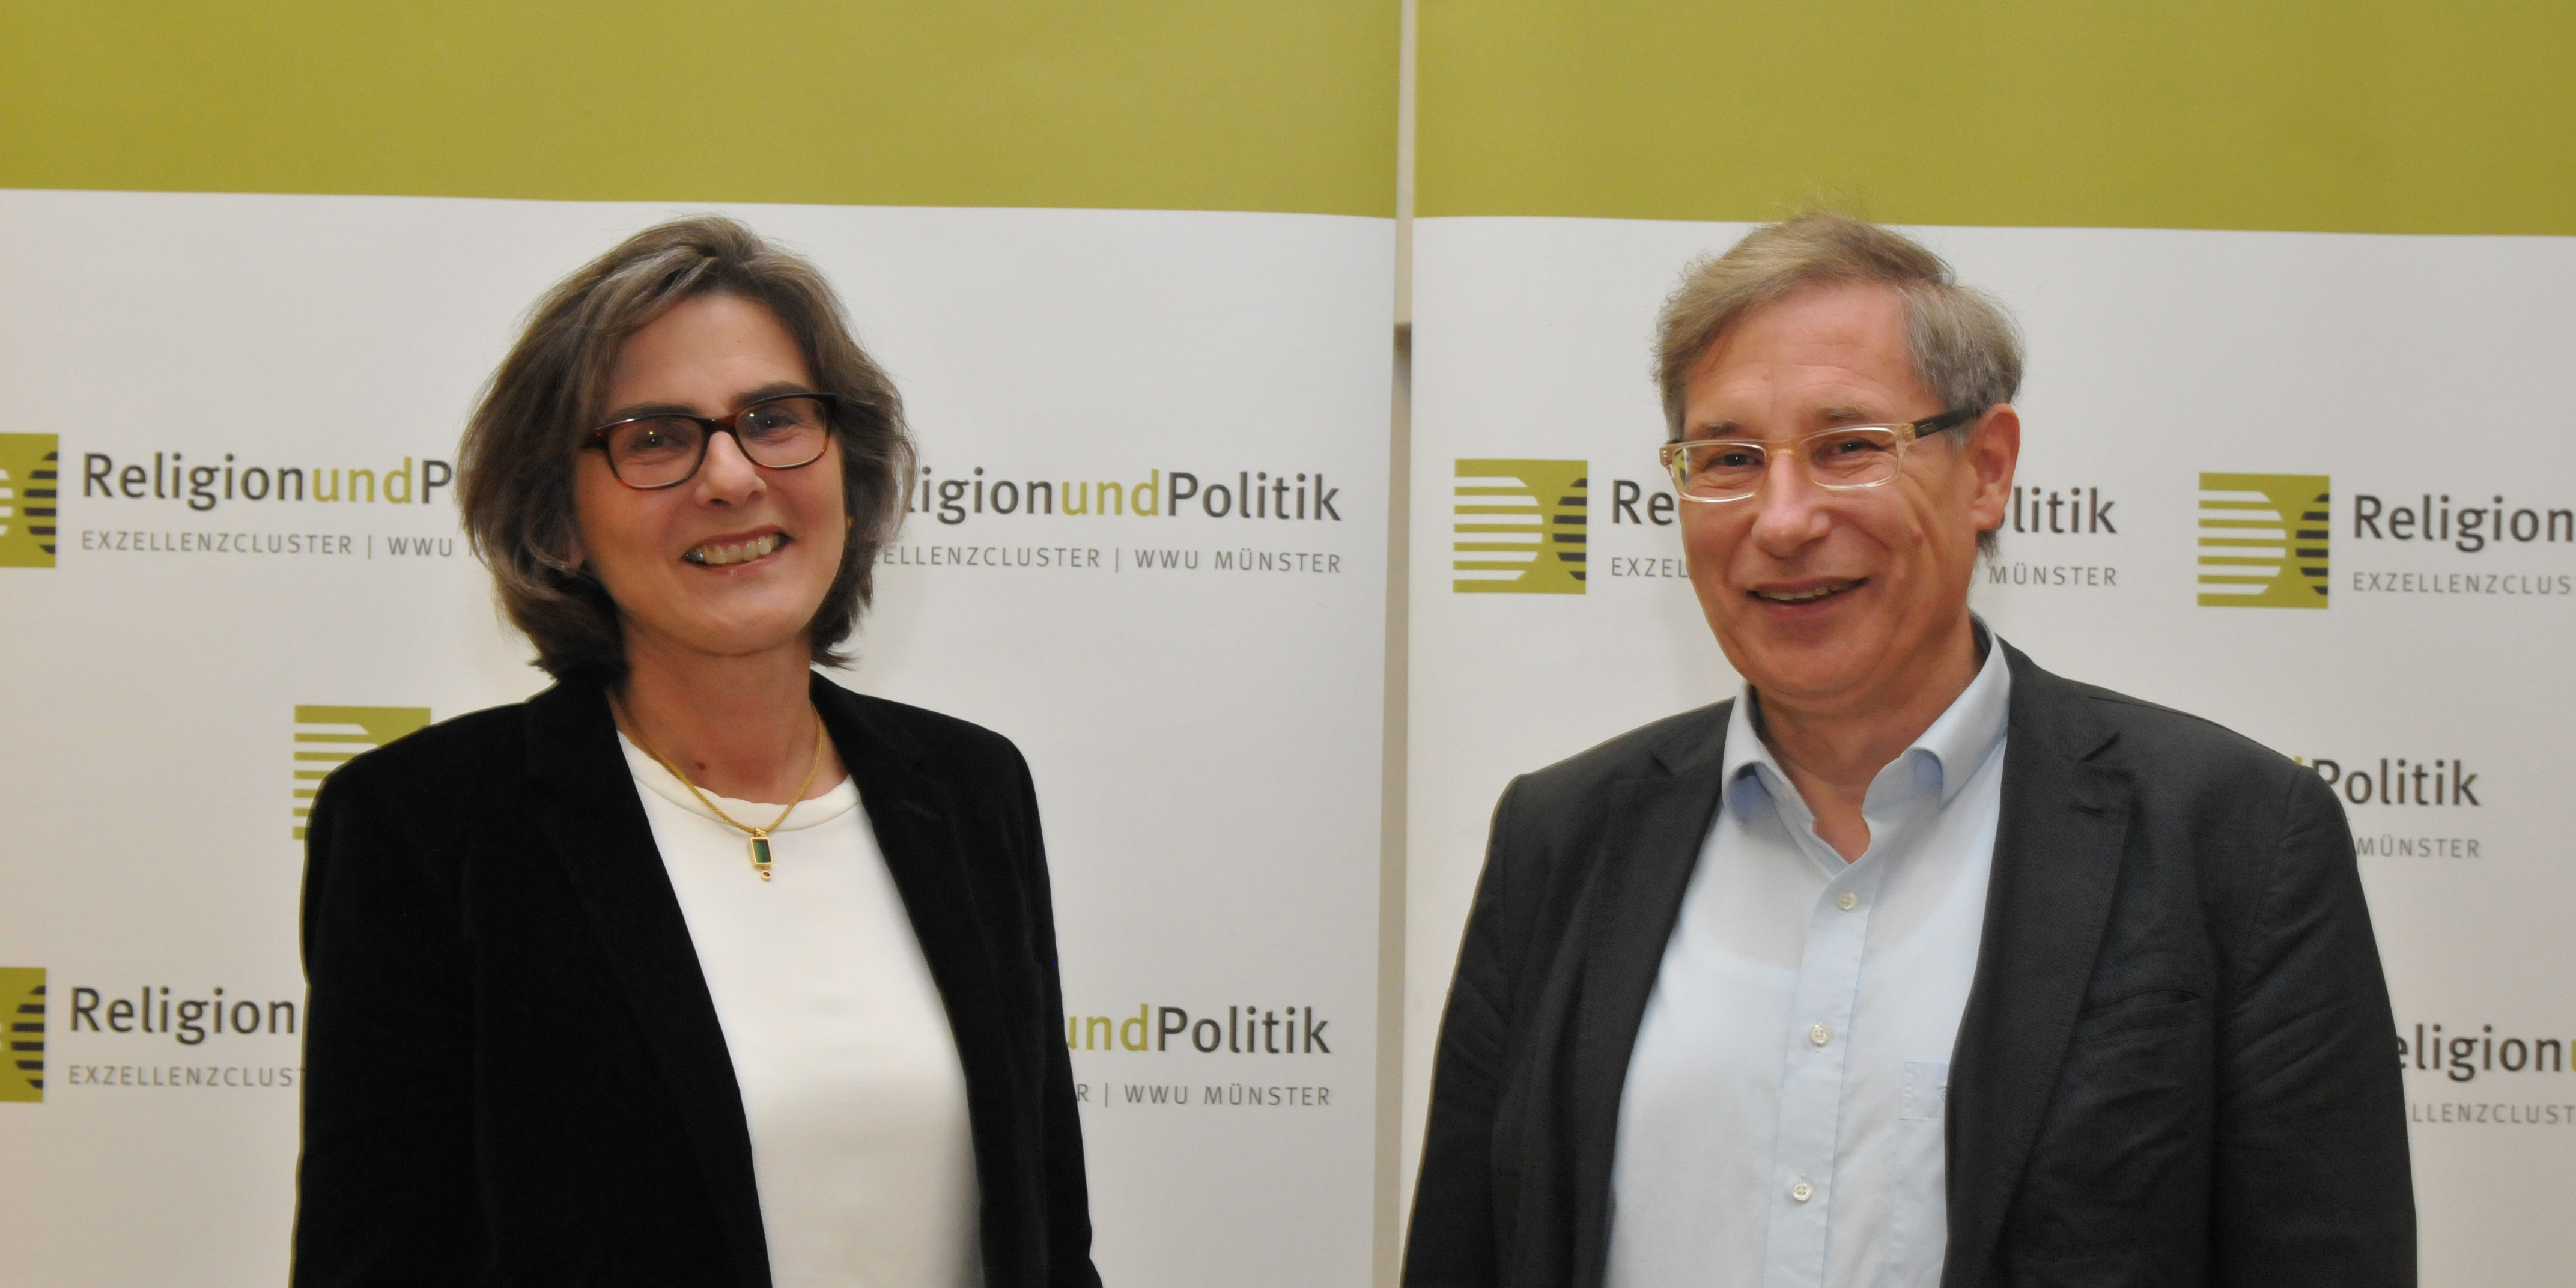 Prof. Dr. Barbara Stollberg-Rilinger, Prof. Dr. Detlef Pollack